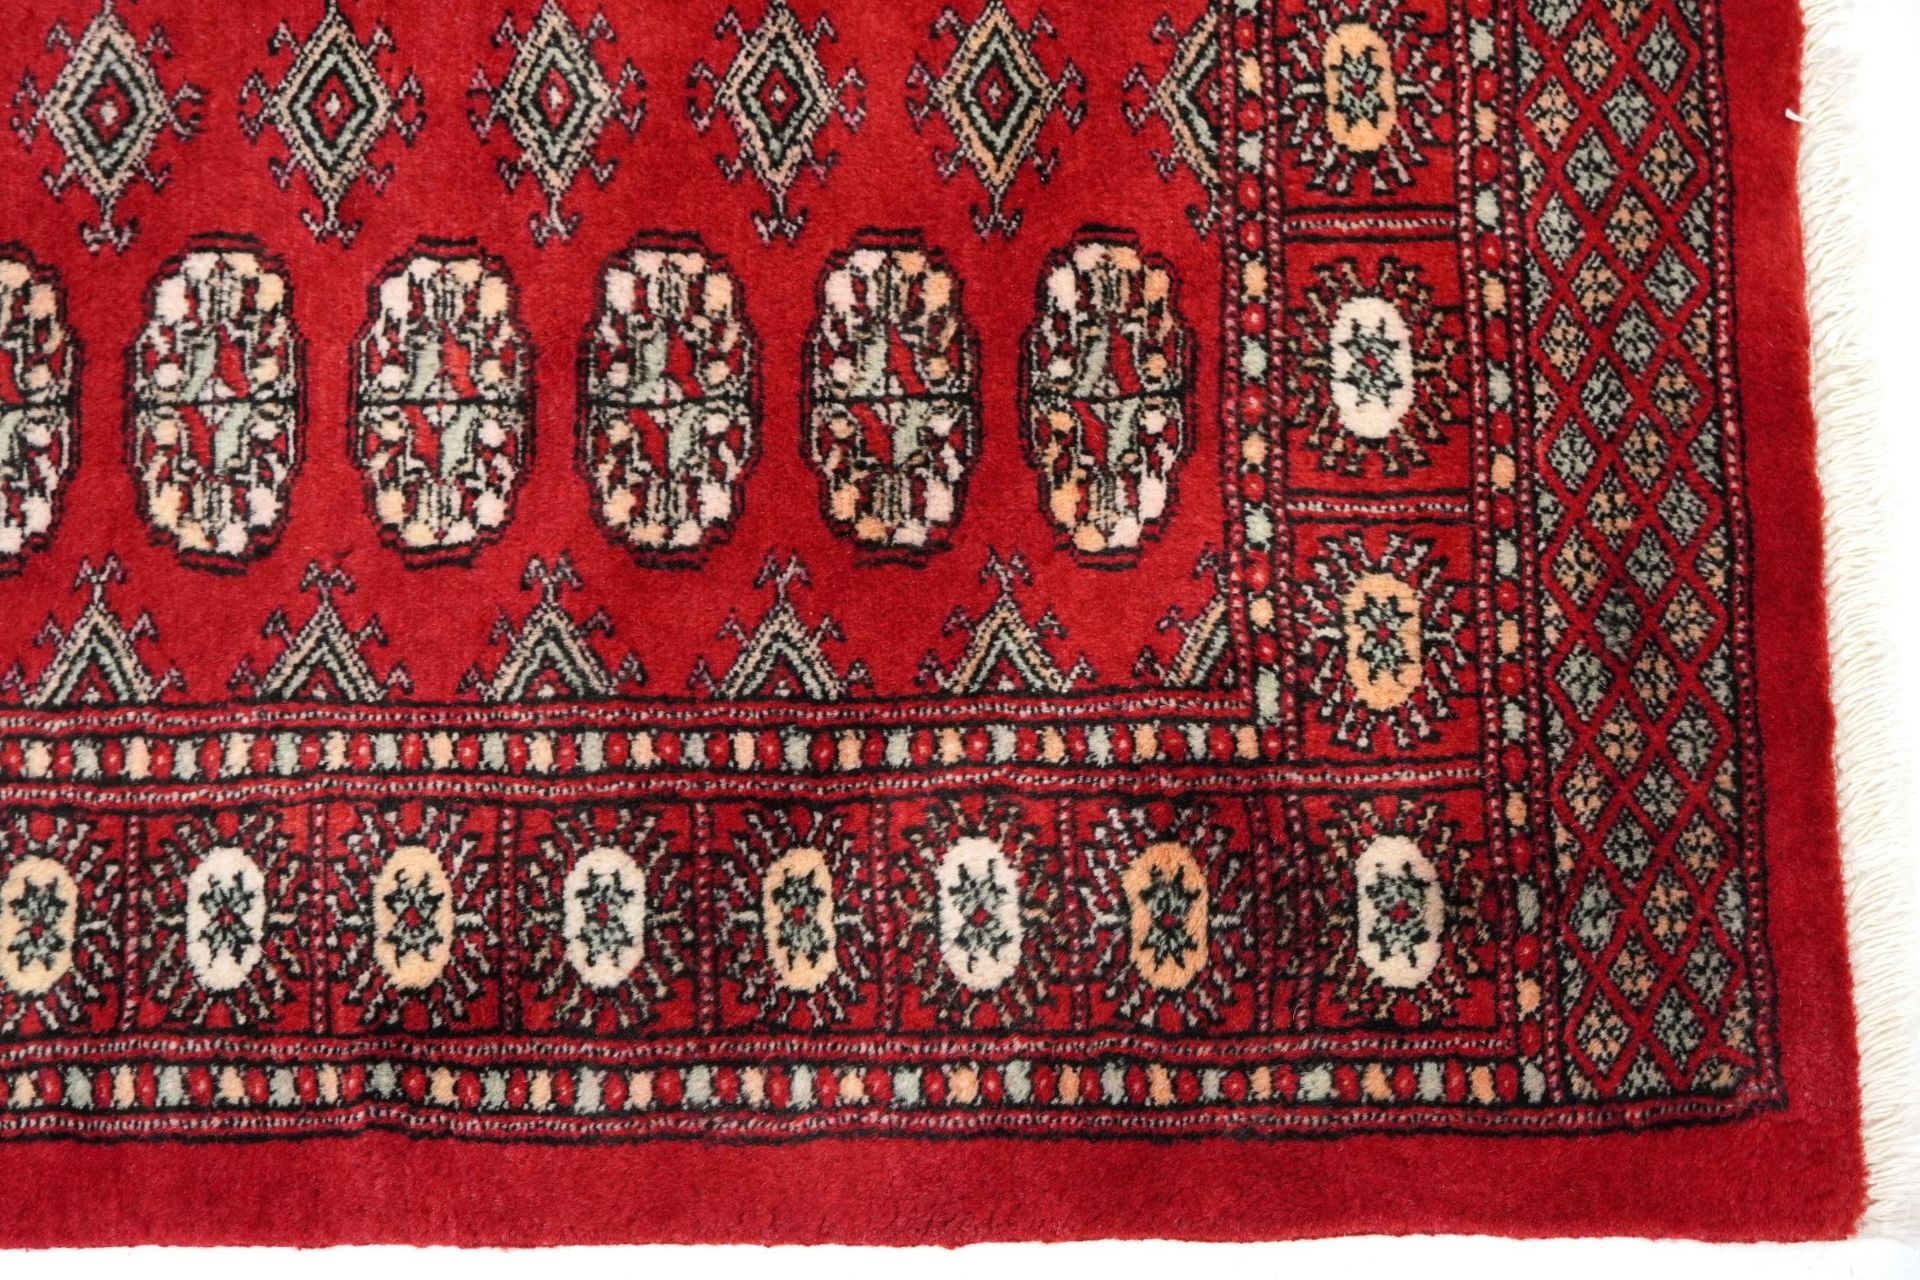 Rectangular Bokhara red ground rug having an all over geometric design, 154cm x 96cm - Image 5 of 6